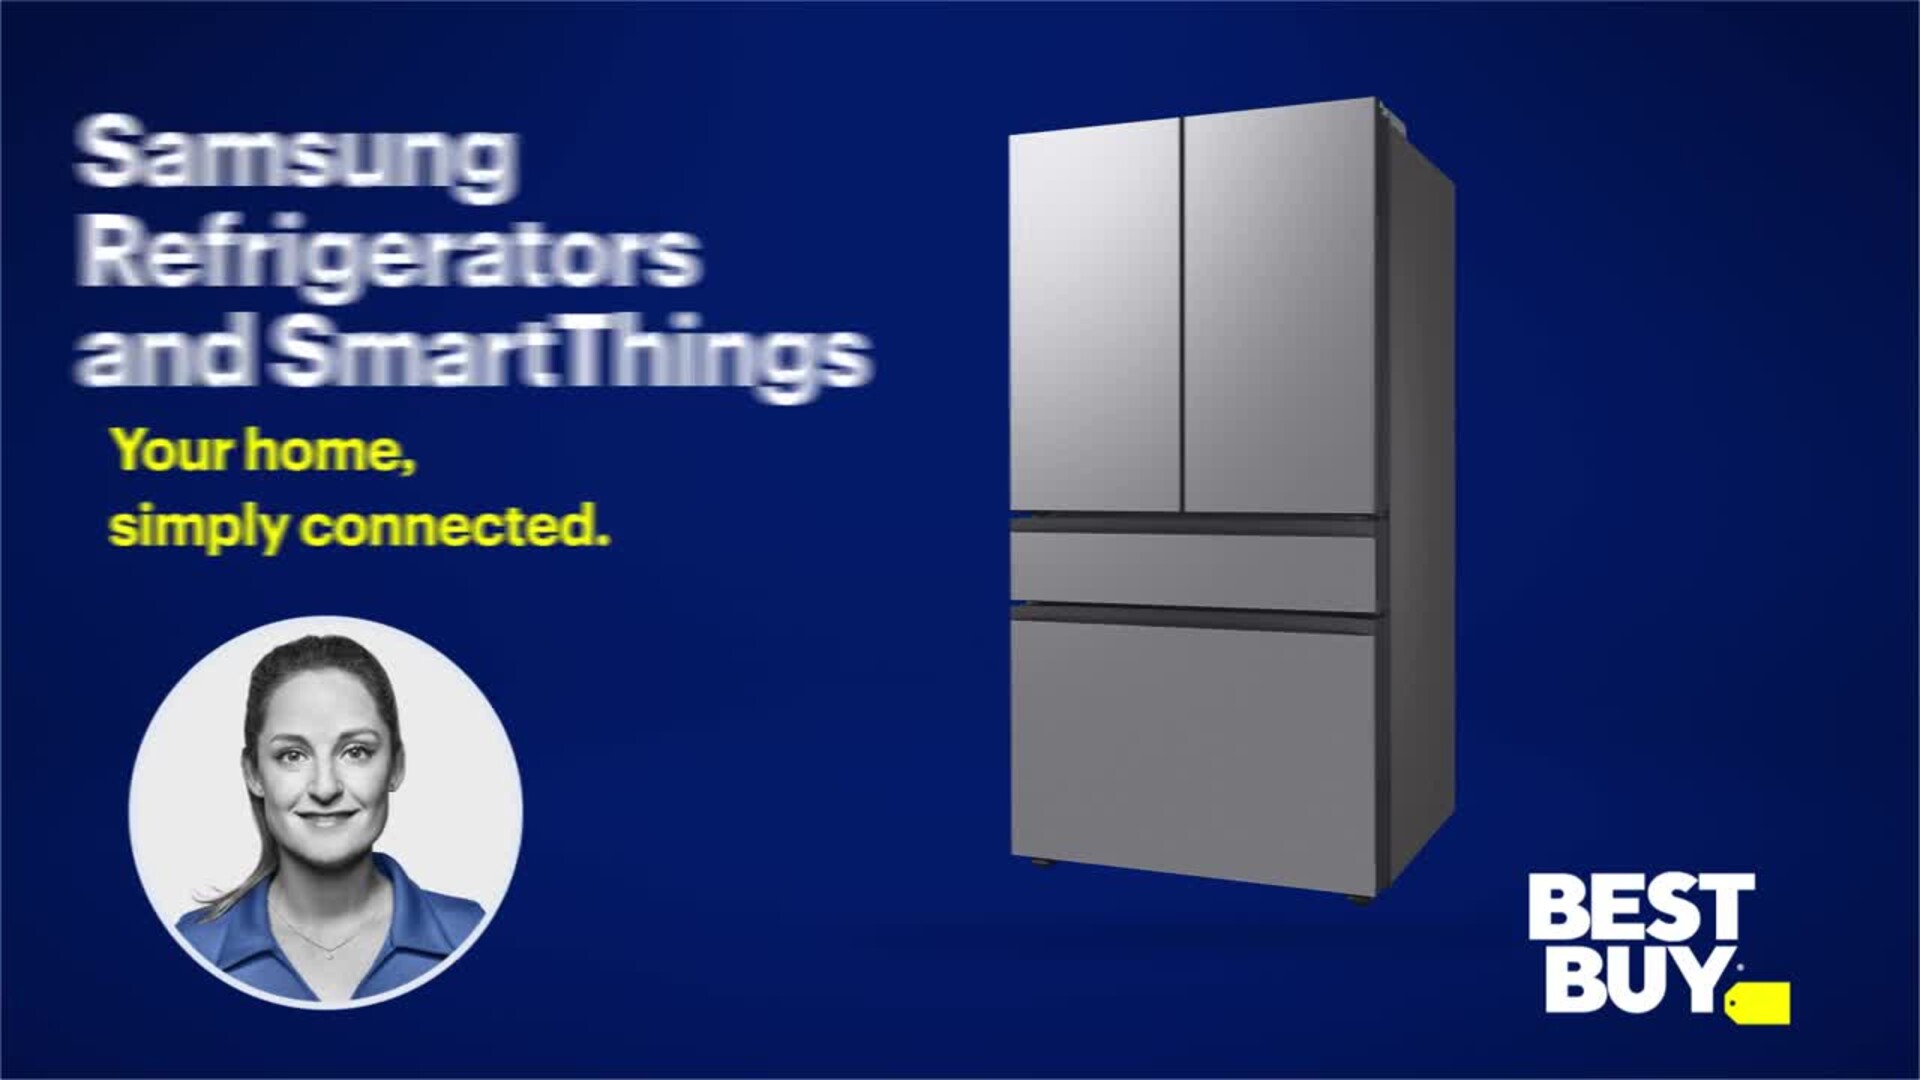 Samsung - Bespoke 30 Cu. ft 3-Door French Door Refrigerator with Autofill Water Pitcher - White Glass